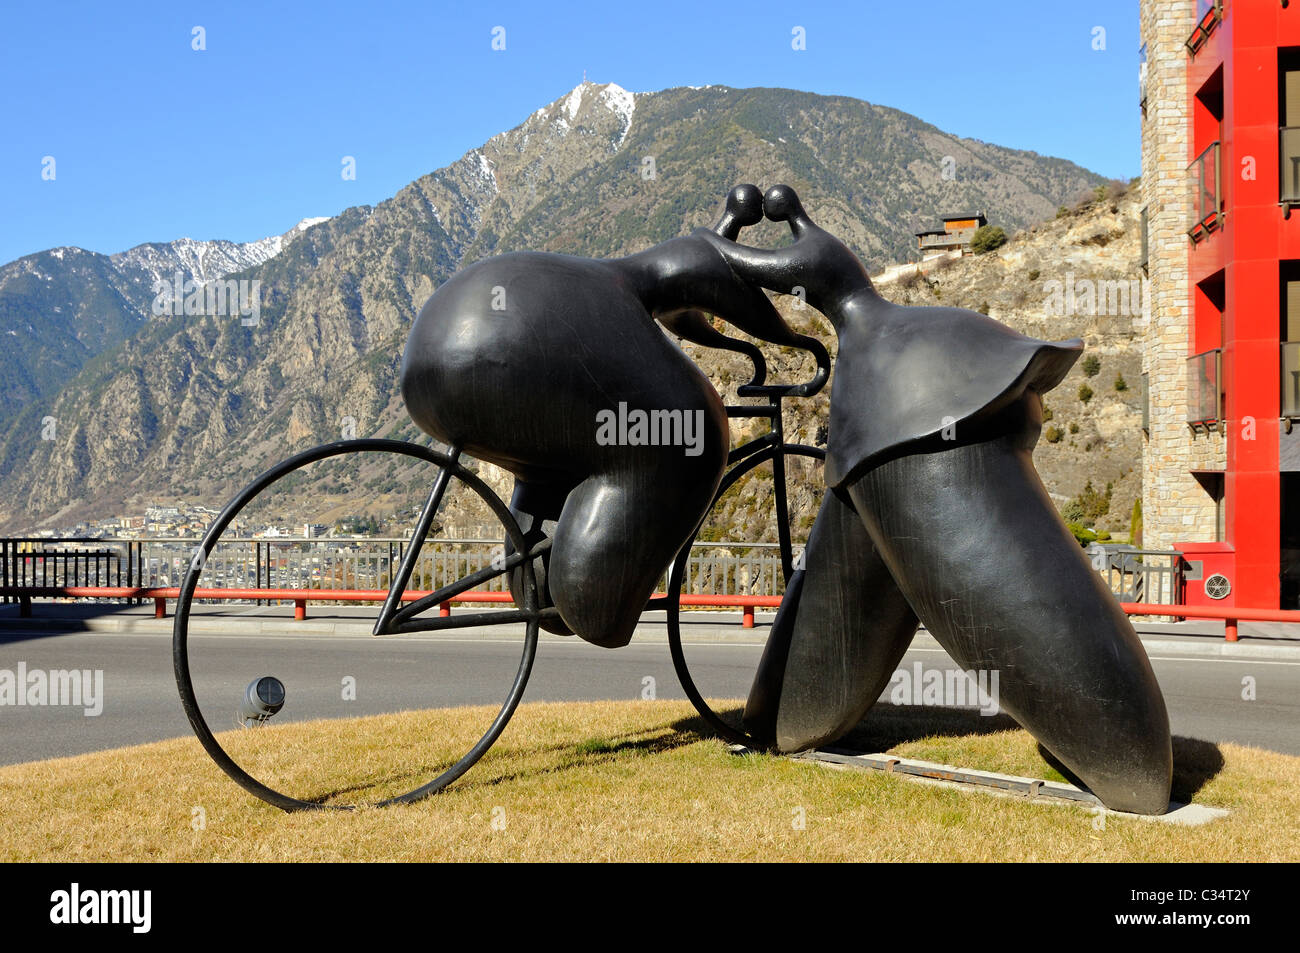 Sculpture 'Winner kiss' by Jean-Louis Toutain, Escaldes-Engordany, Principality of Andorra Stock Photo